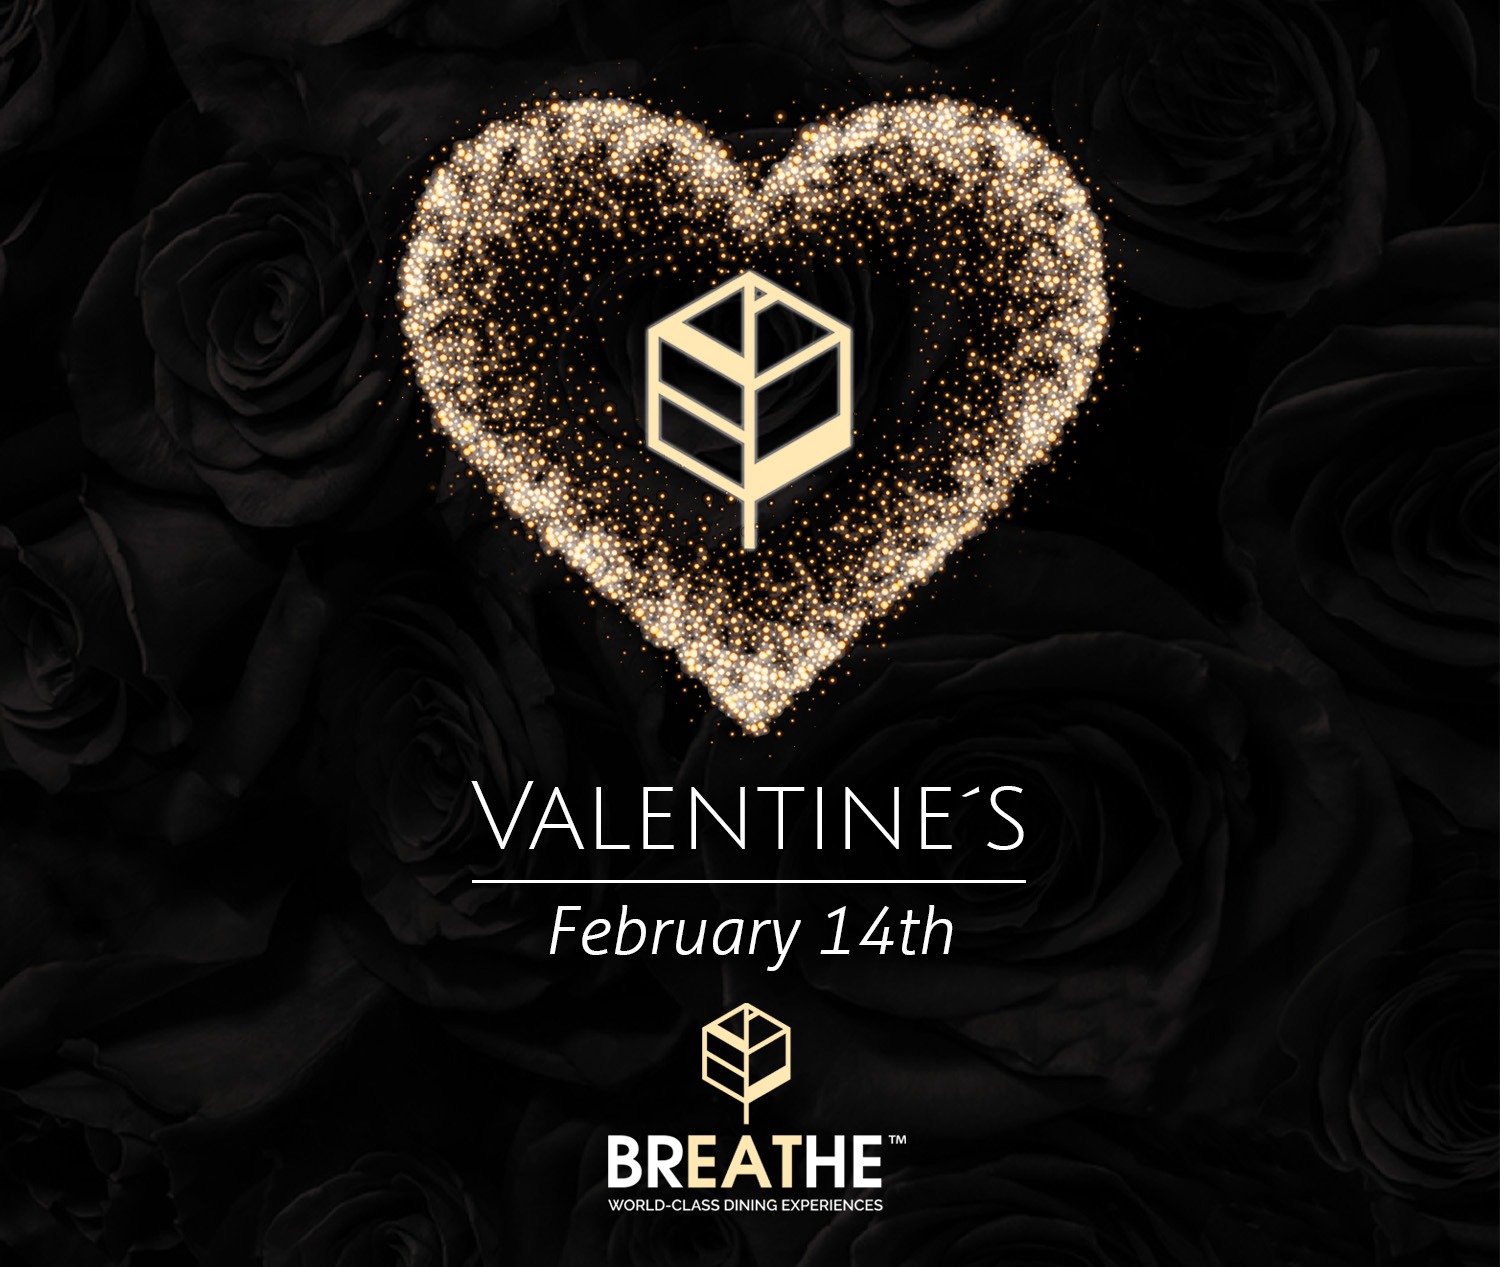 Valentine's at Breathe